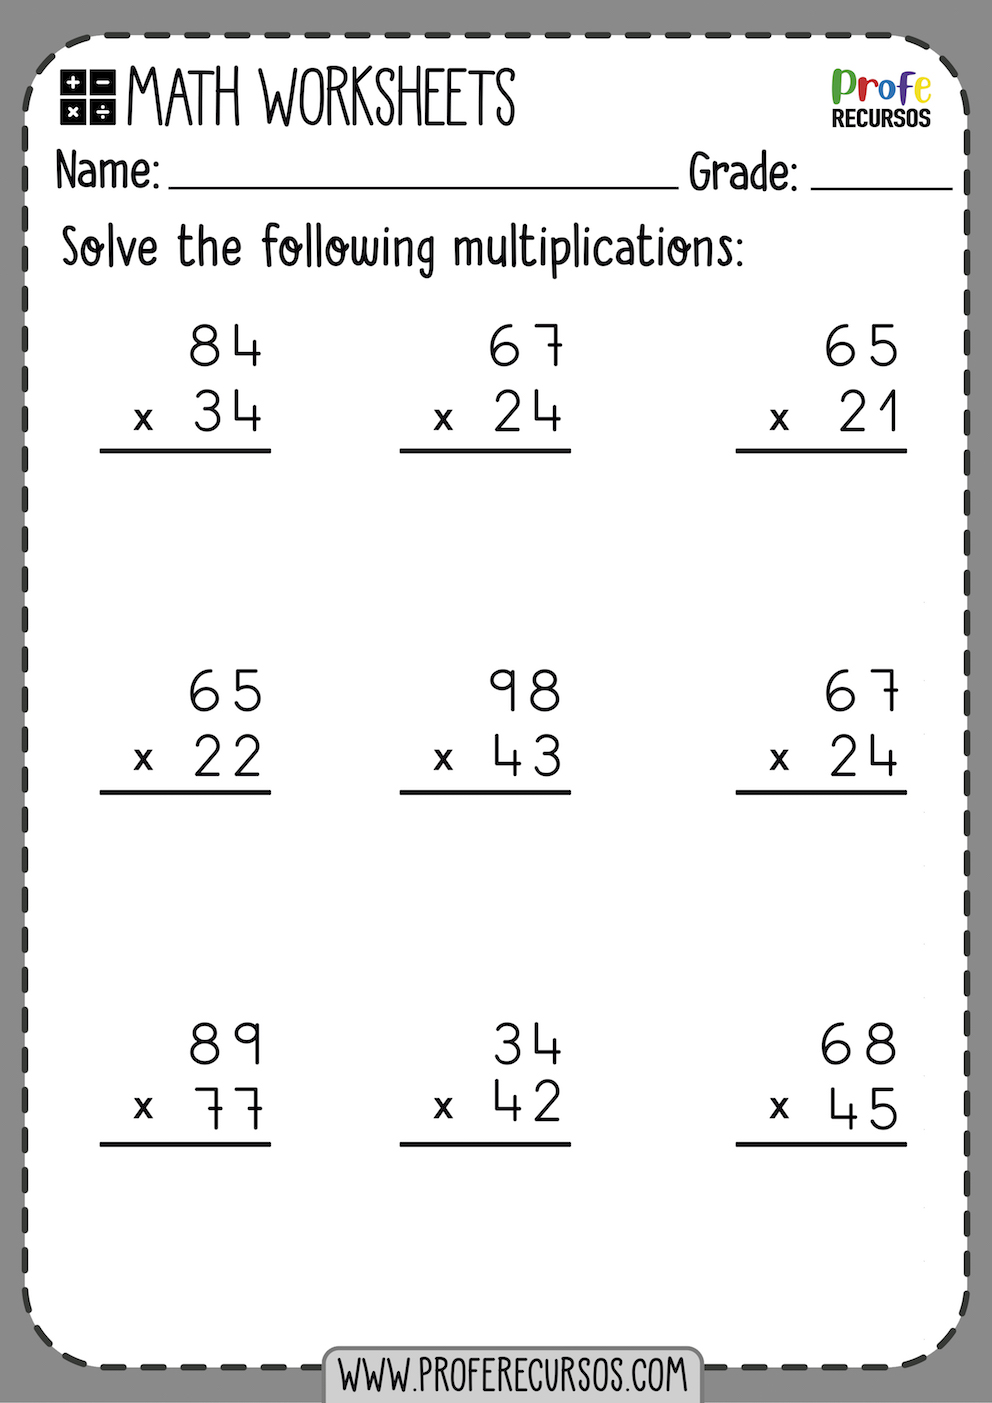 multiplication-table-2-worksheet-pdf